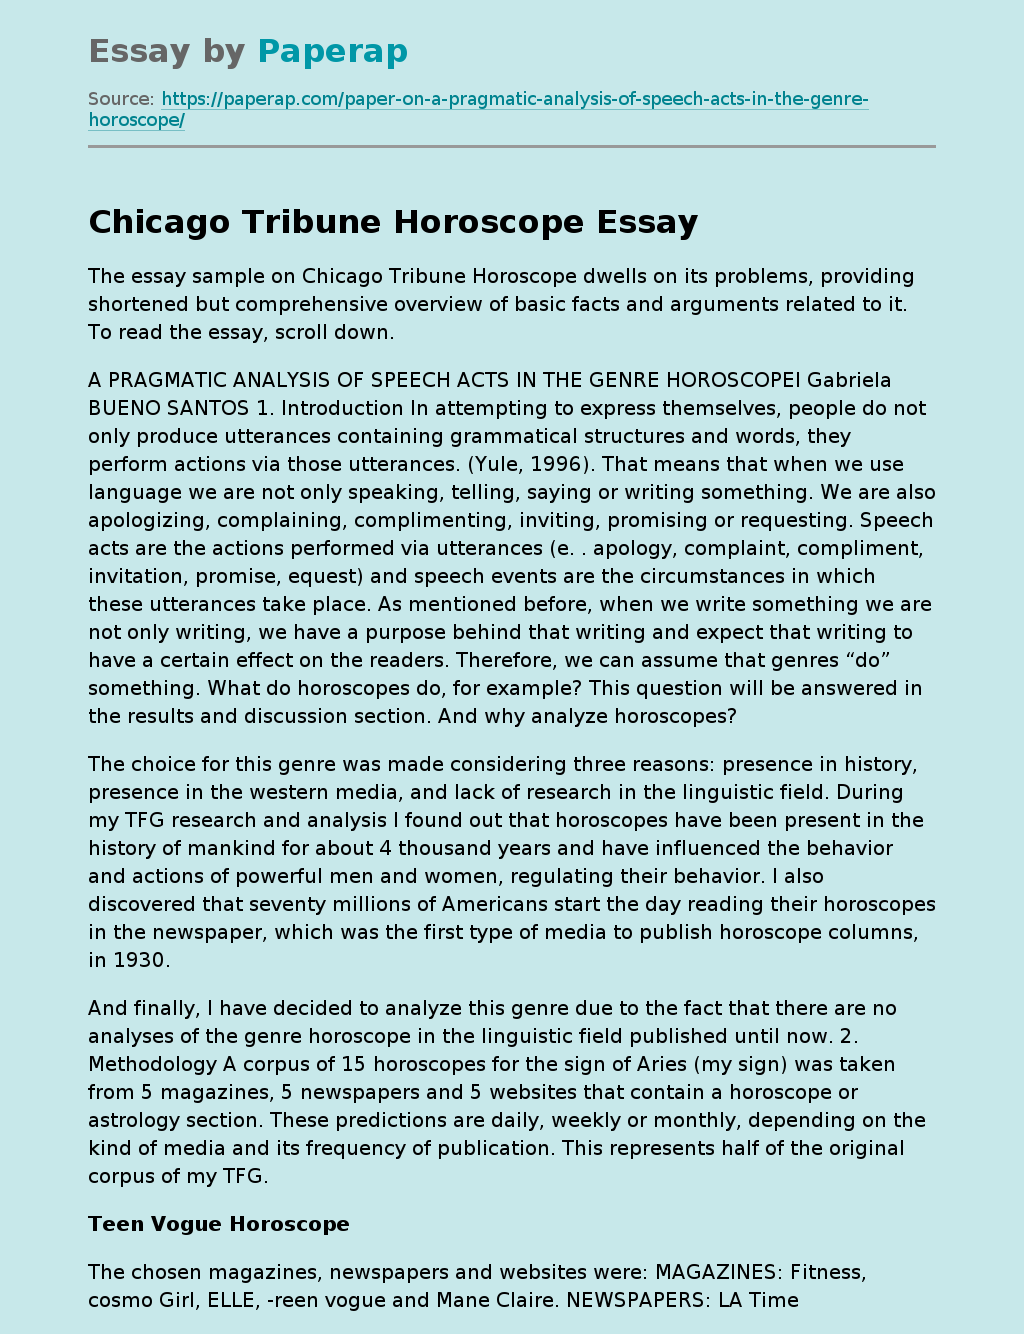 Essay Sample on Chicago Tribune Horoscope